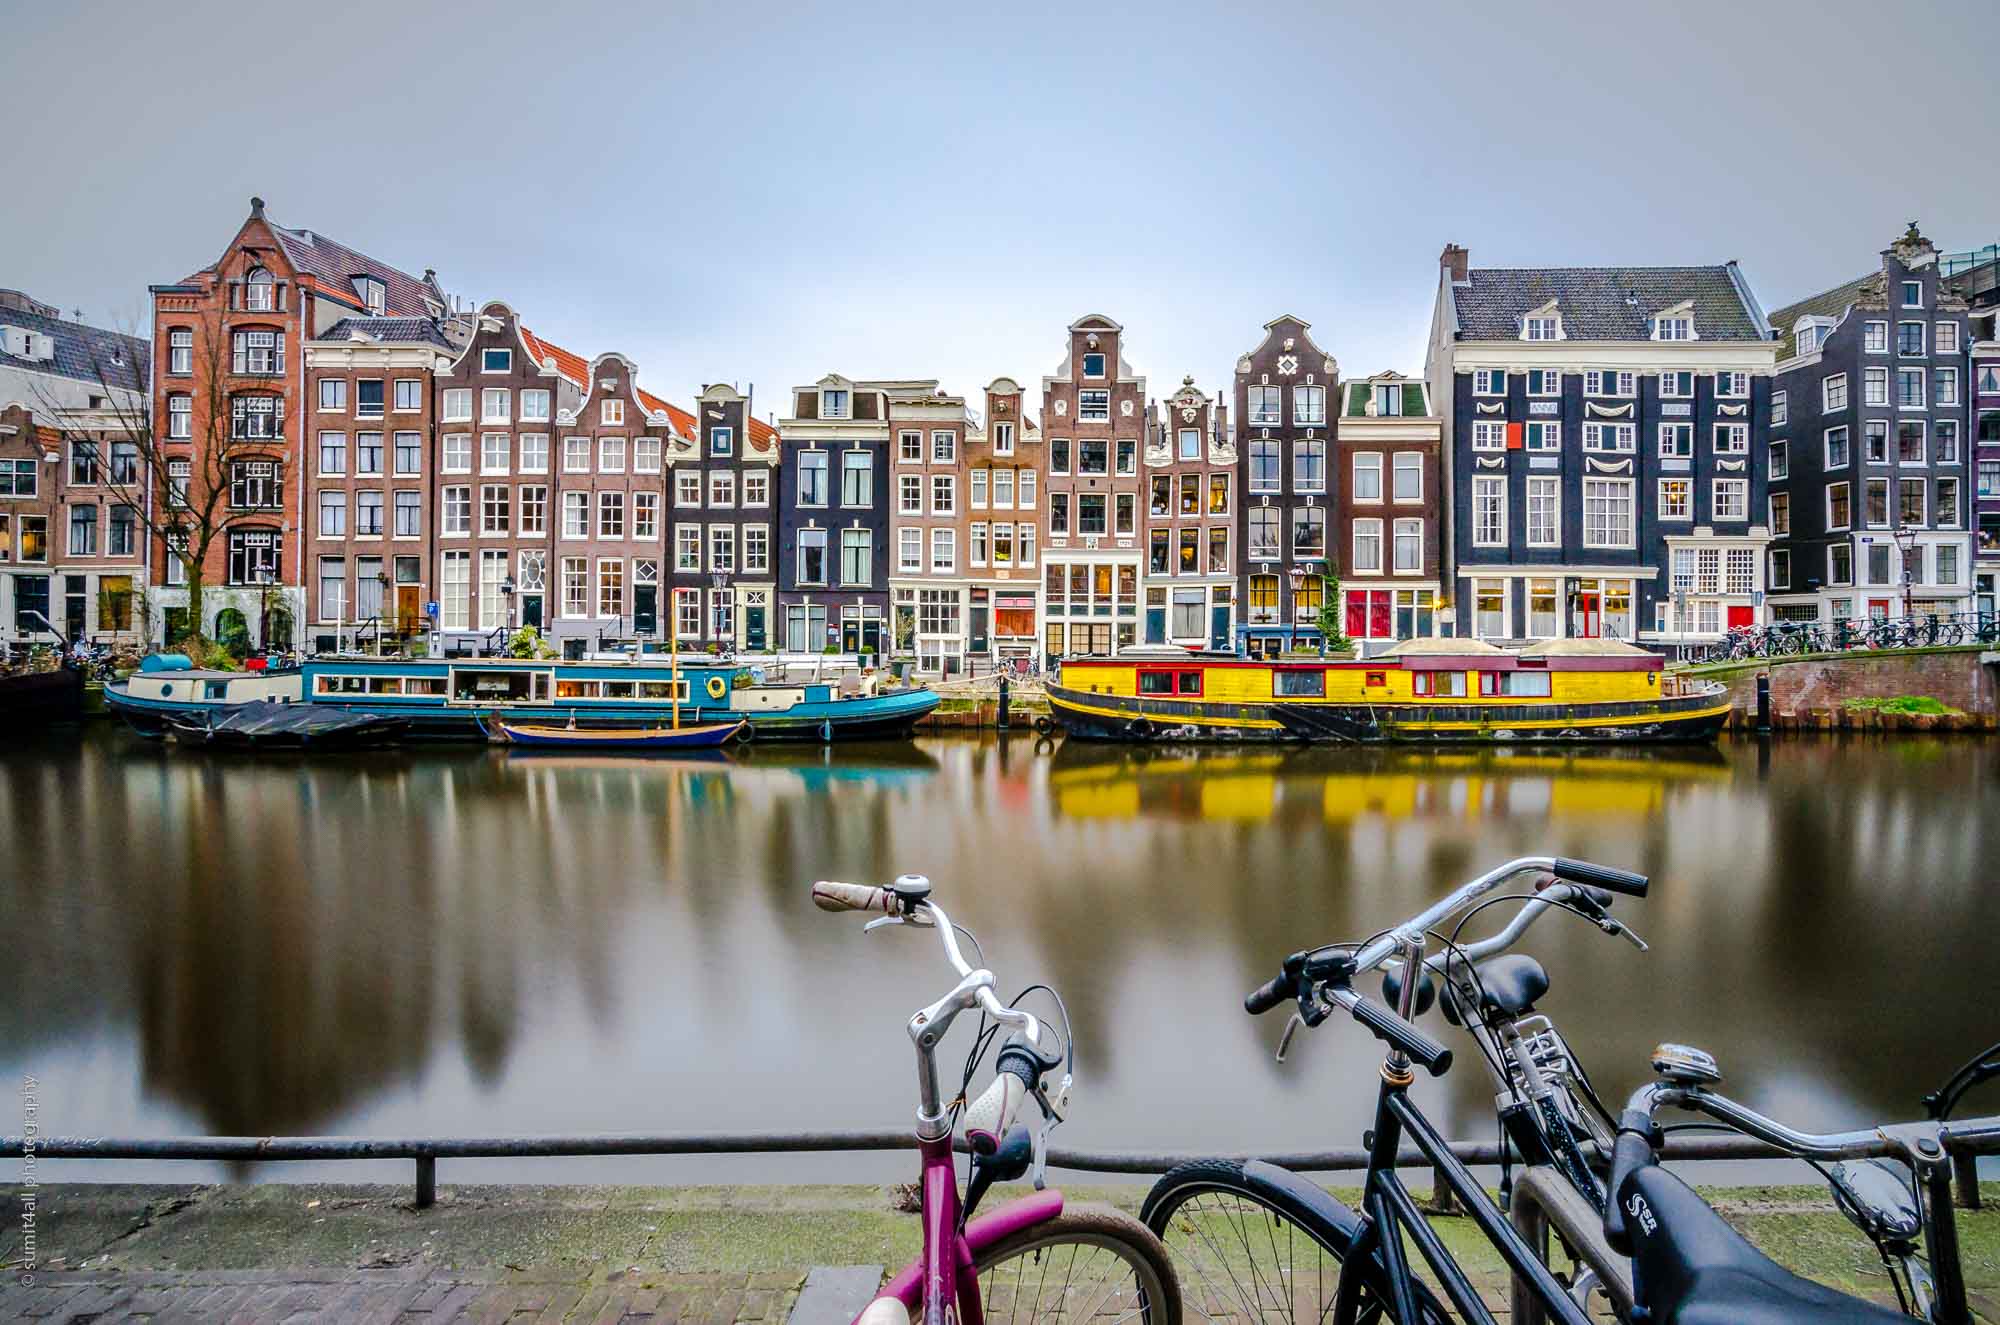 Bikes, houseboats and narrow Amsterdam houses